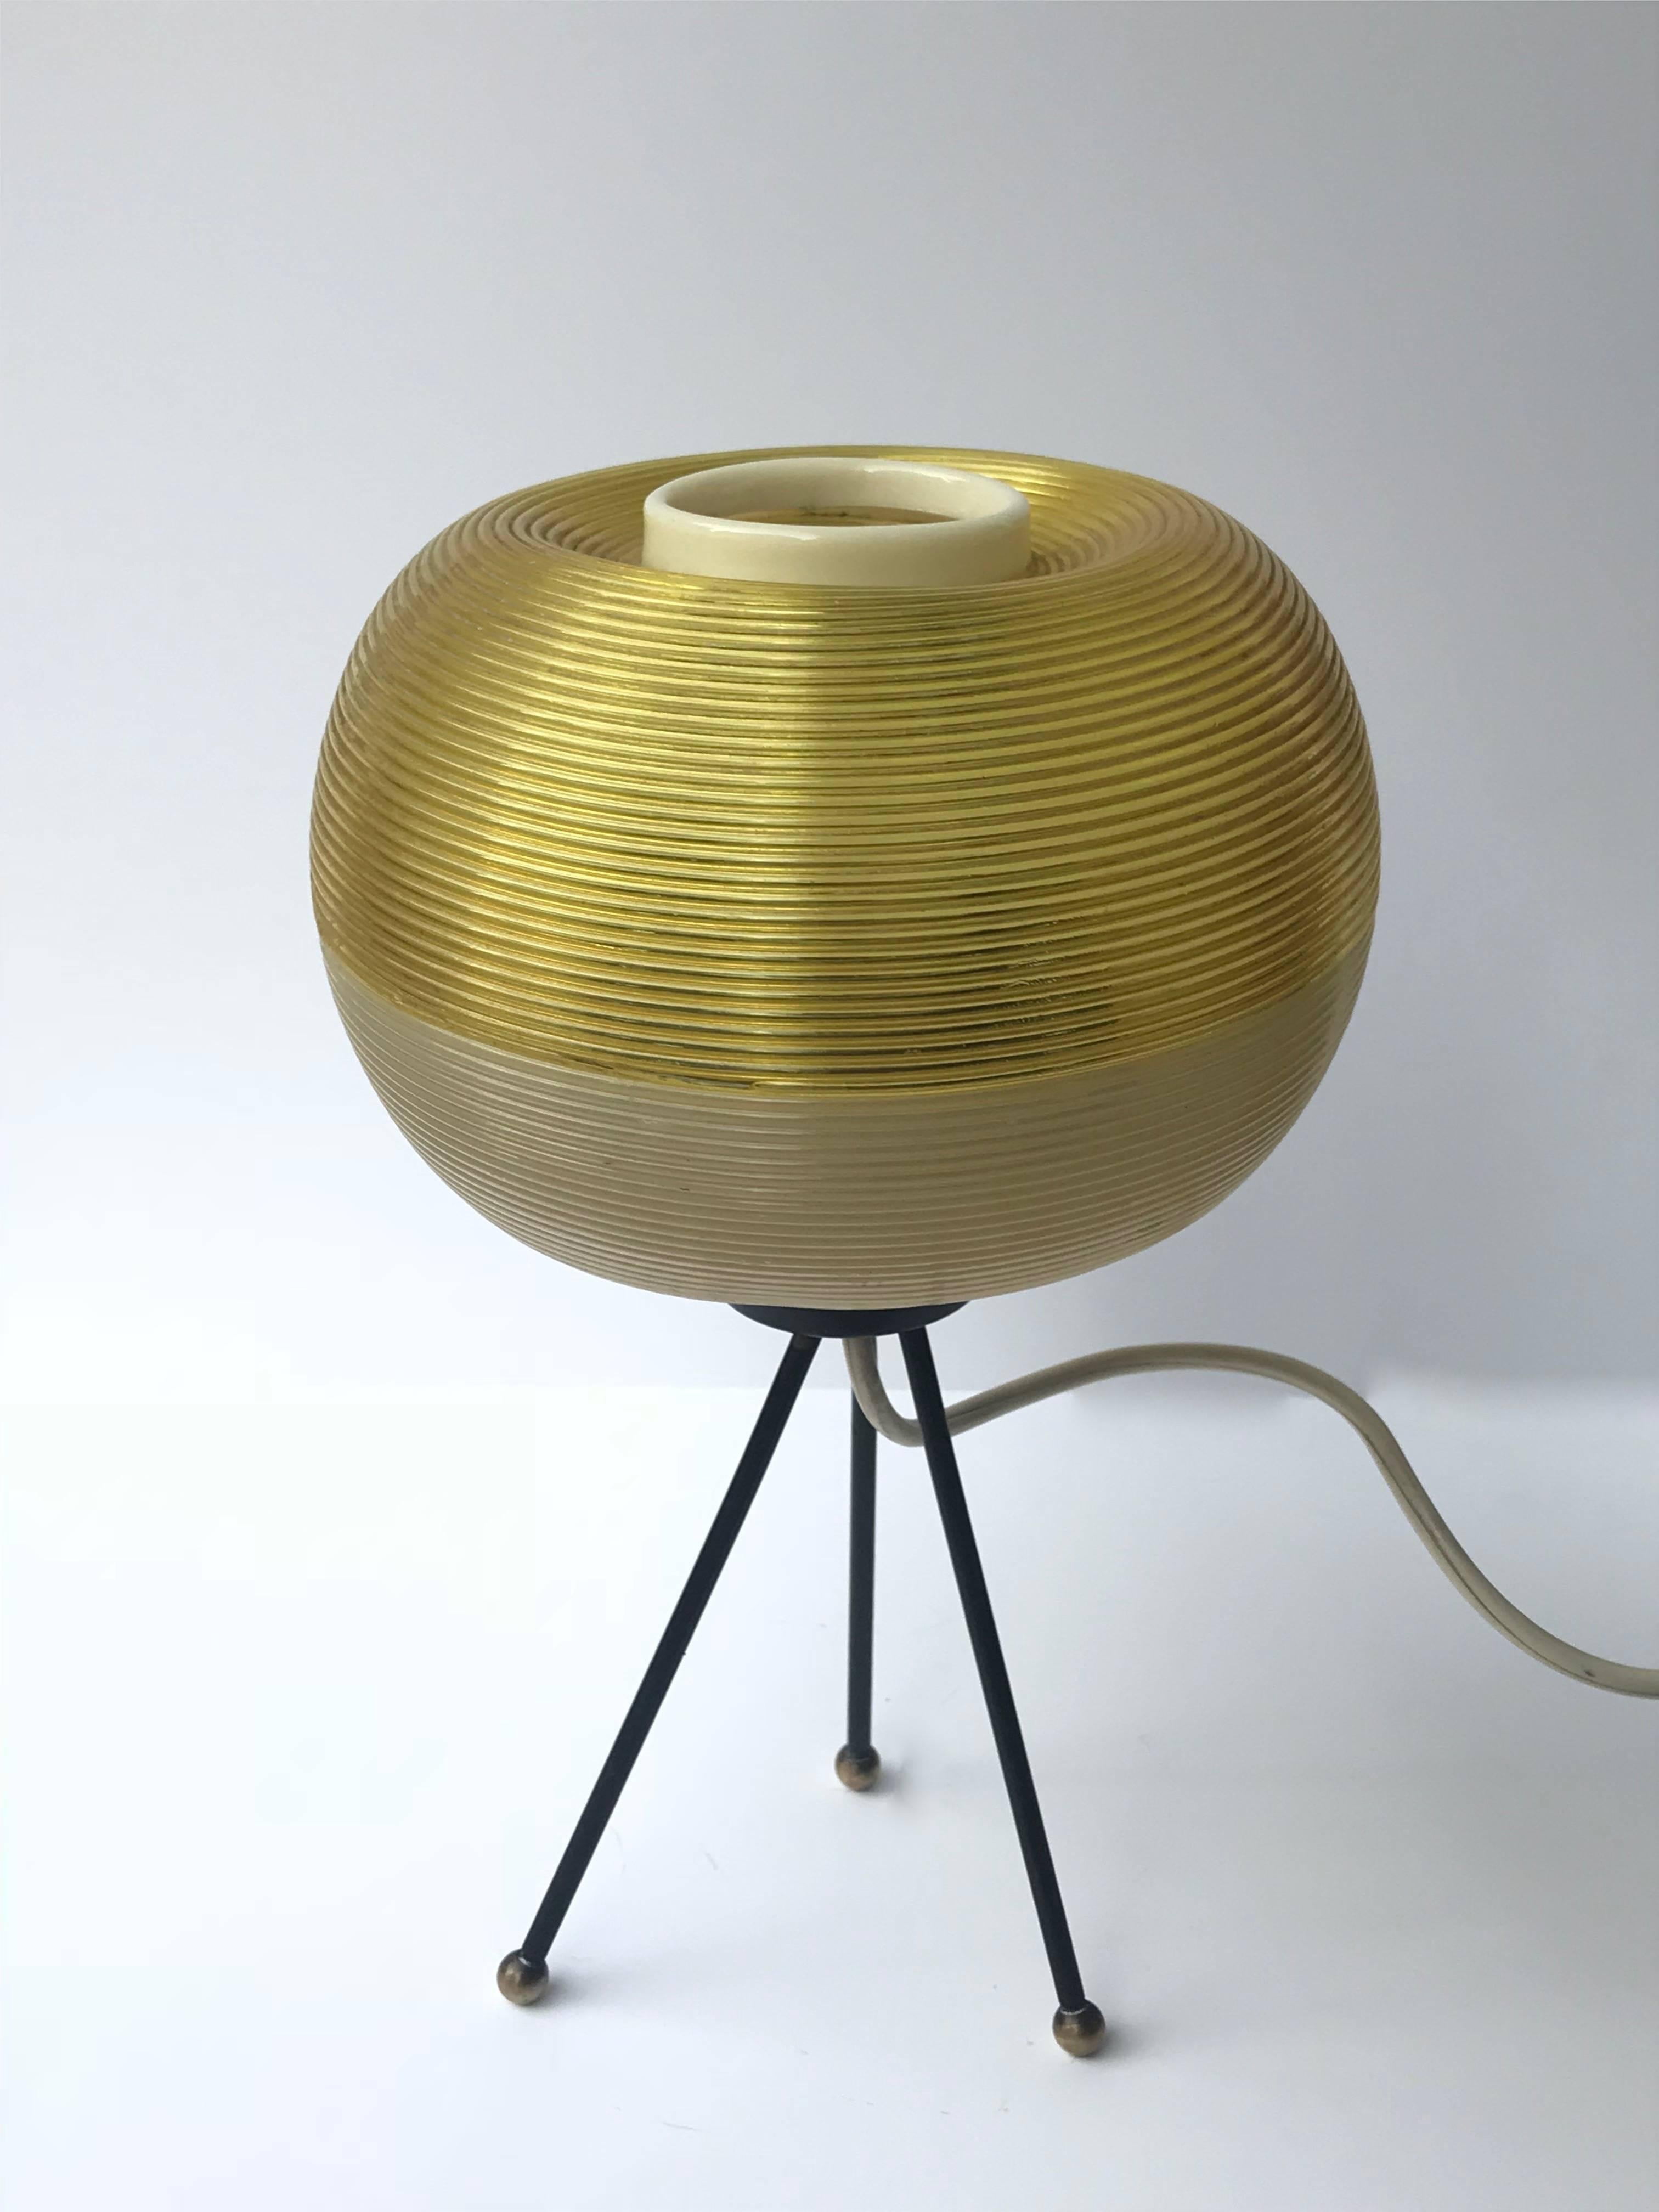 Rotaflex Table Lamp Disderot ARP Guariche Mortar Motte Design 1950s Table Lamp 2